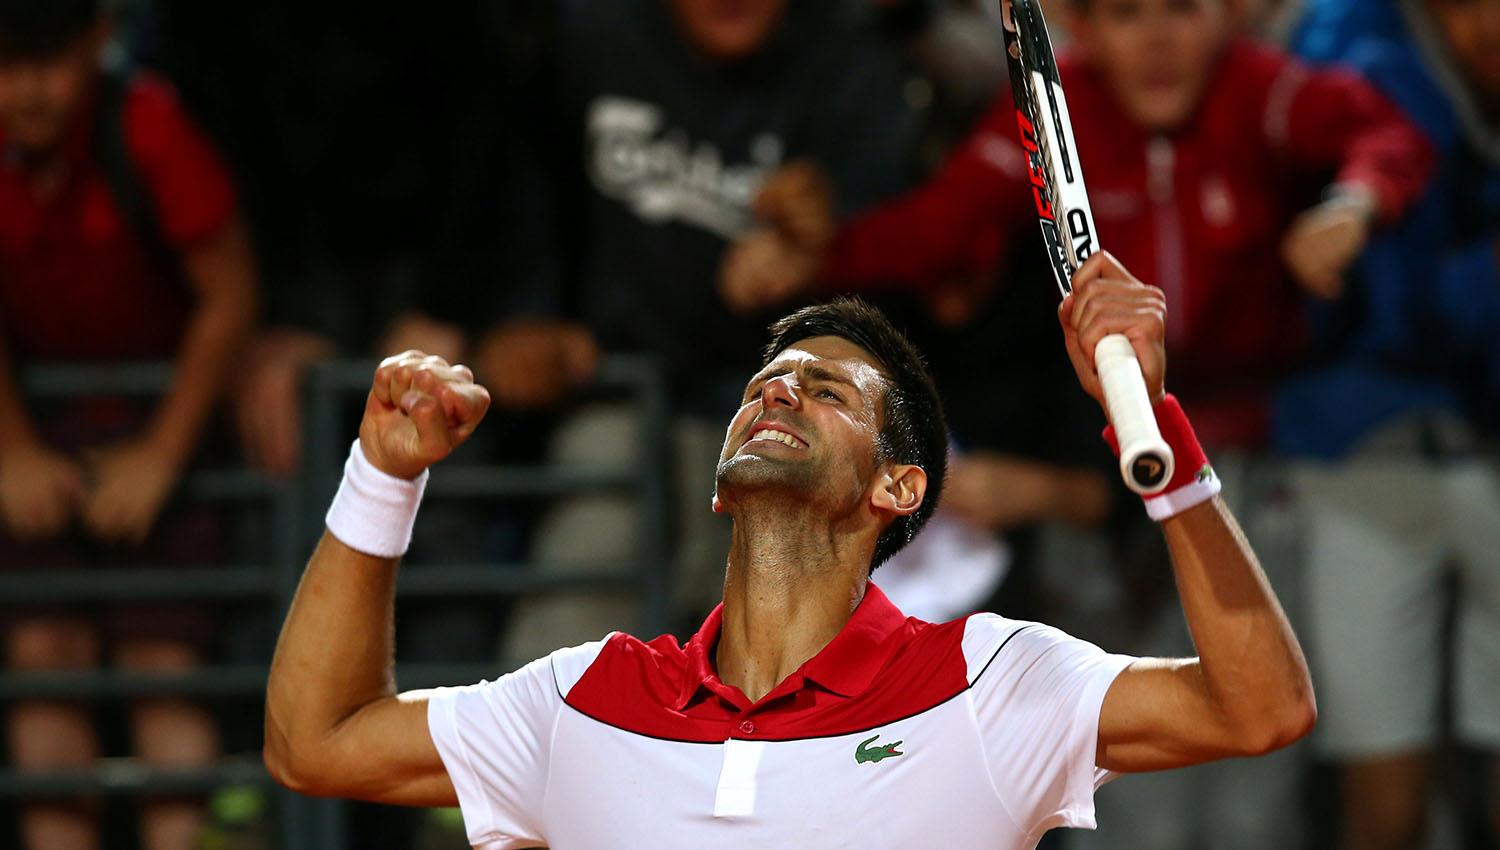 Novak Djokovic perdió el primer set ante Nishikori.
REUTERS